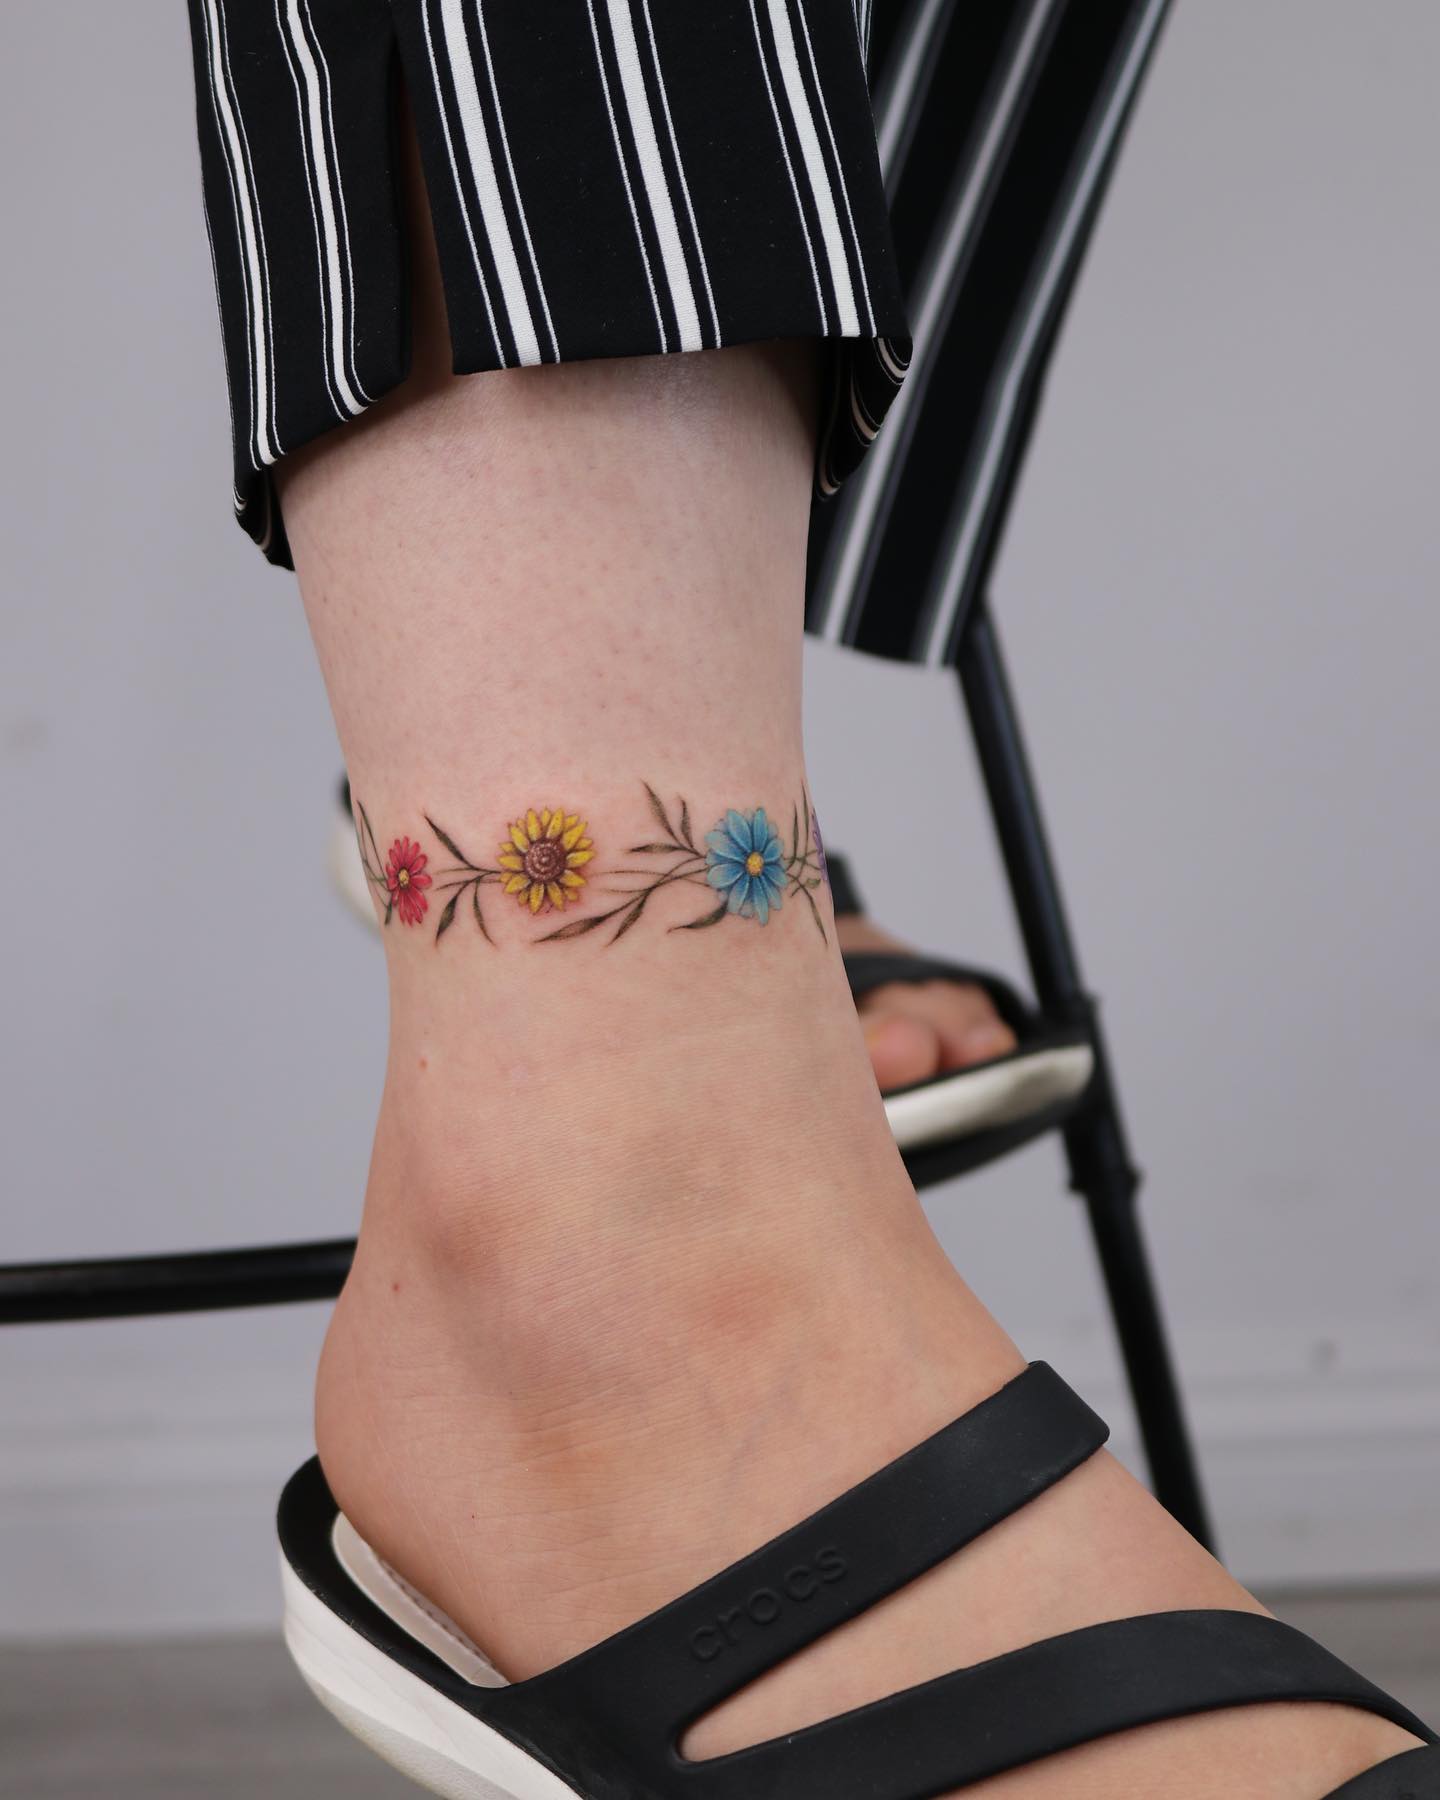 Ankle Bracelet Tattoos - Askideas.com